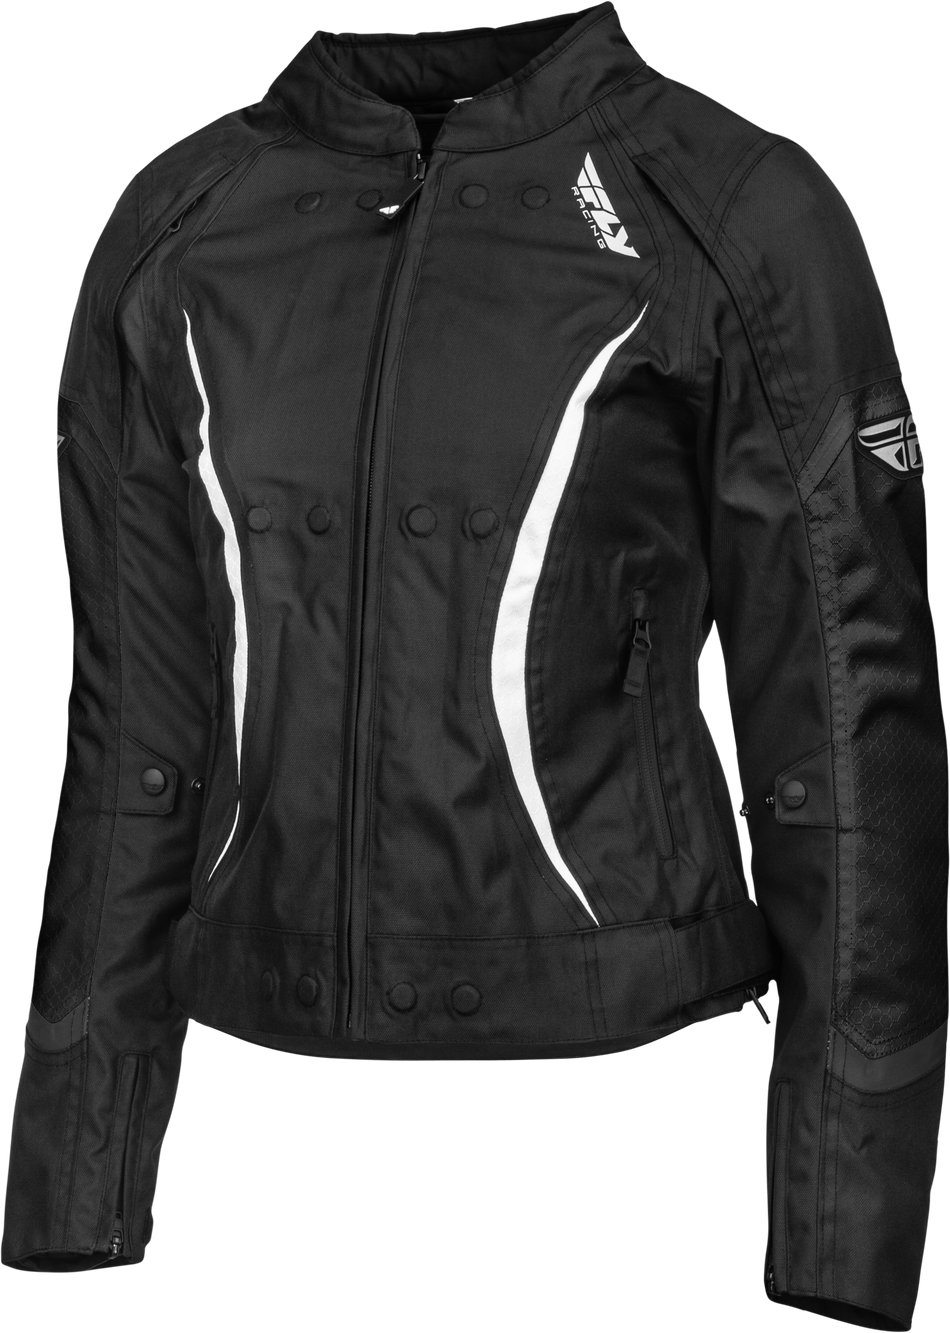 FLY RACING Women's Butane Jacket Black/White Md 477-7042M